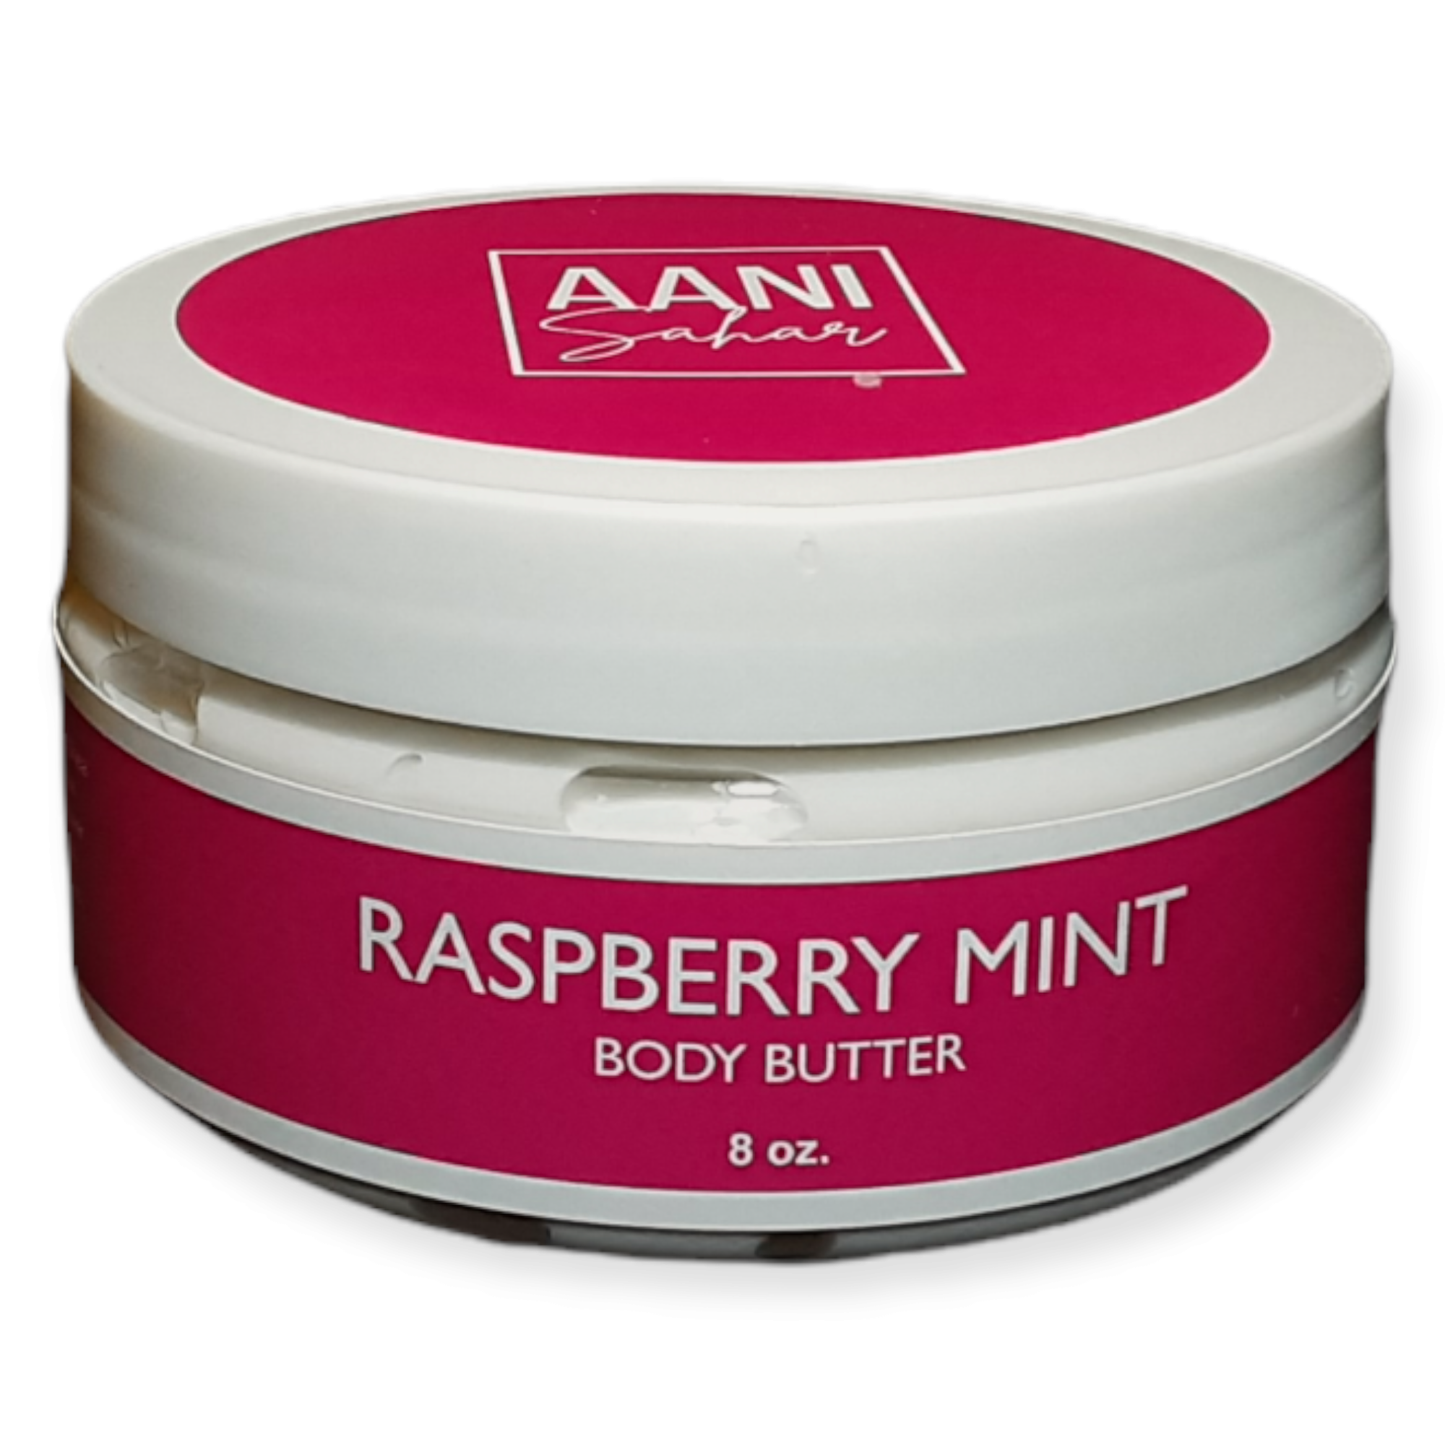 Raspberry Mint Body Butter